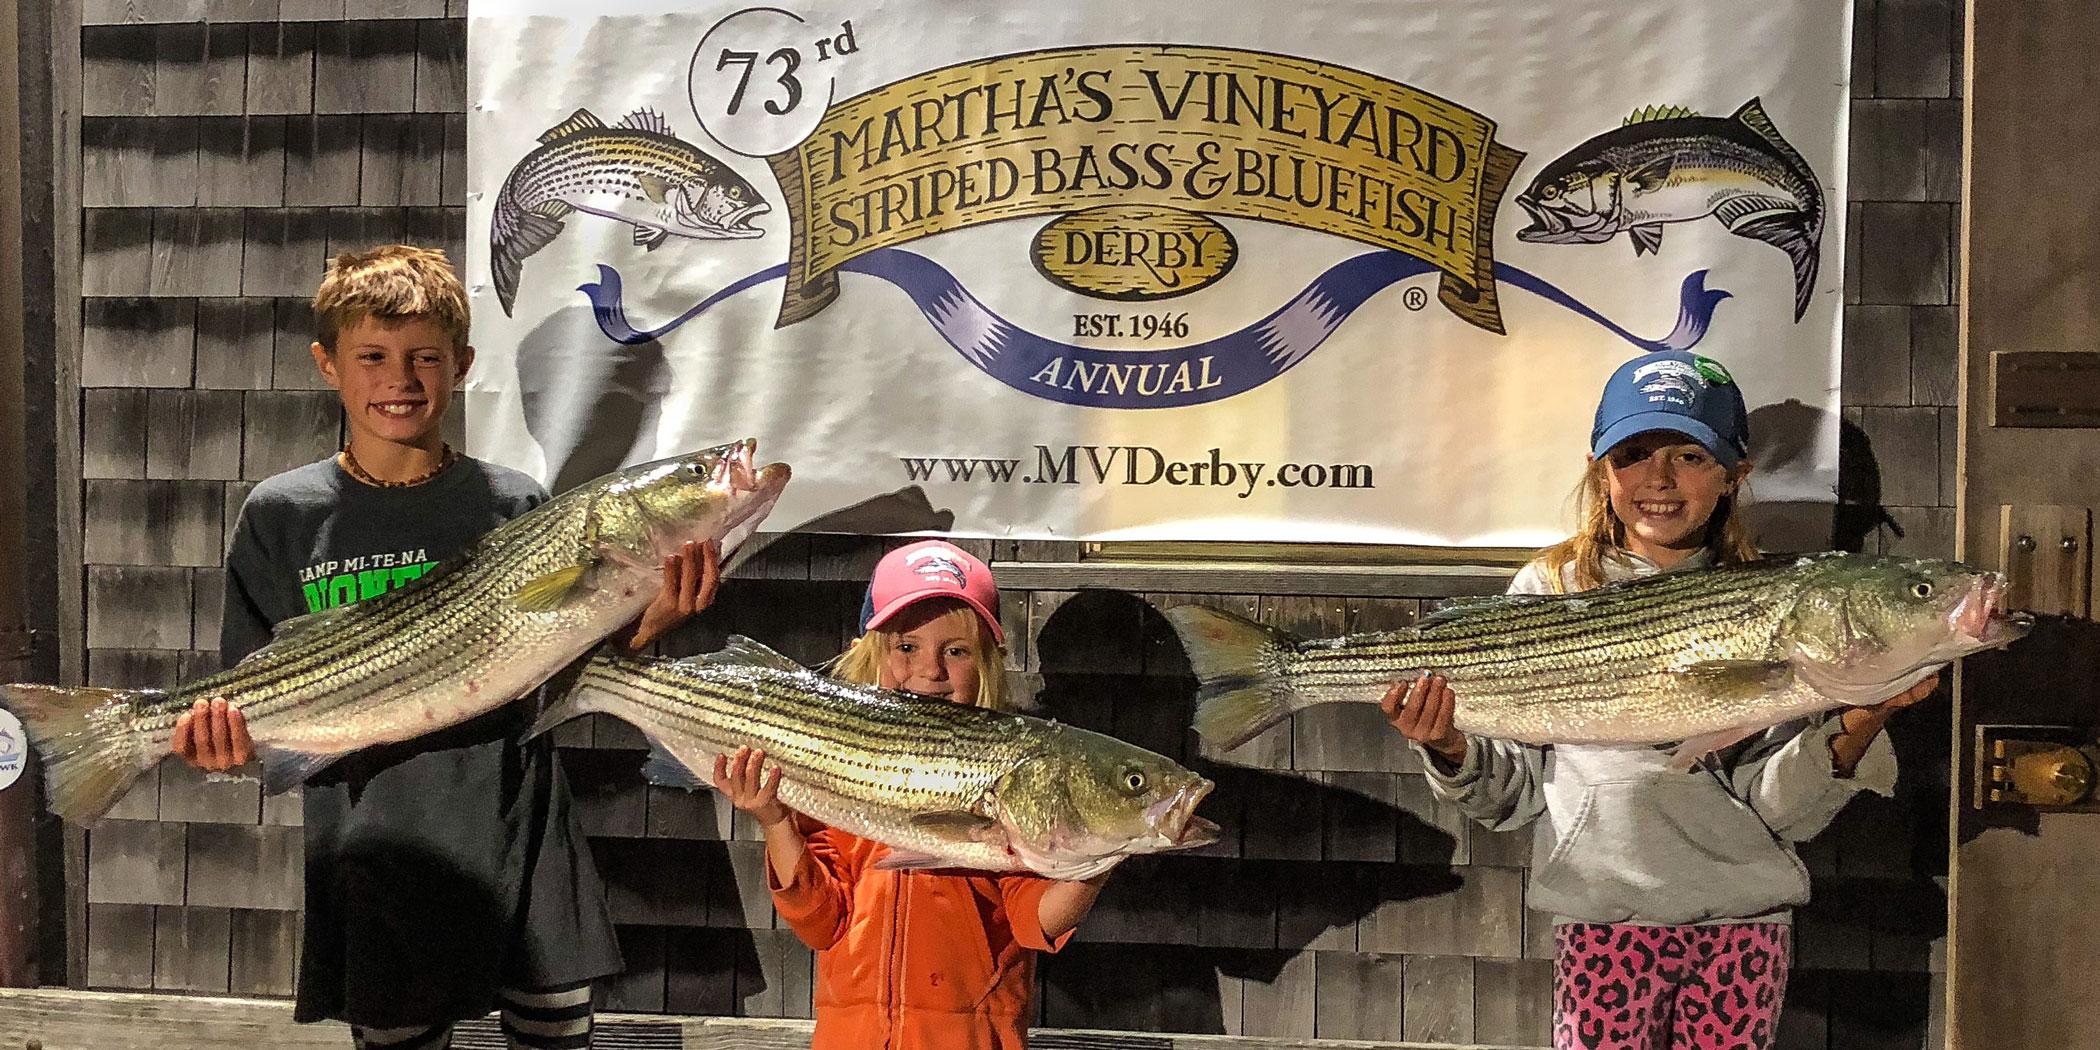 PHOTO: Martha’s Vineyard Striped Bass and Bluefish Derby